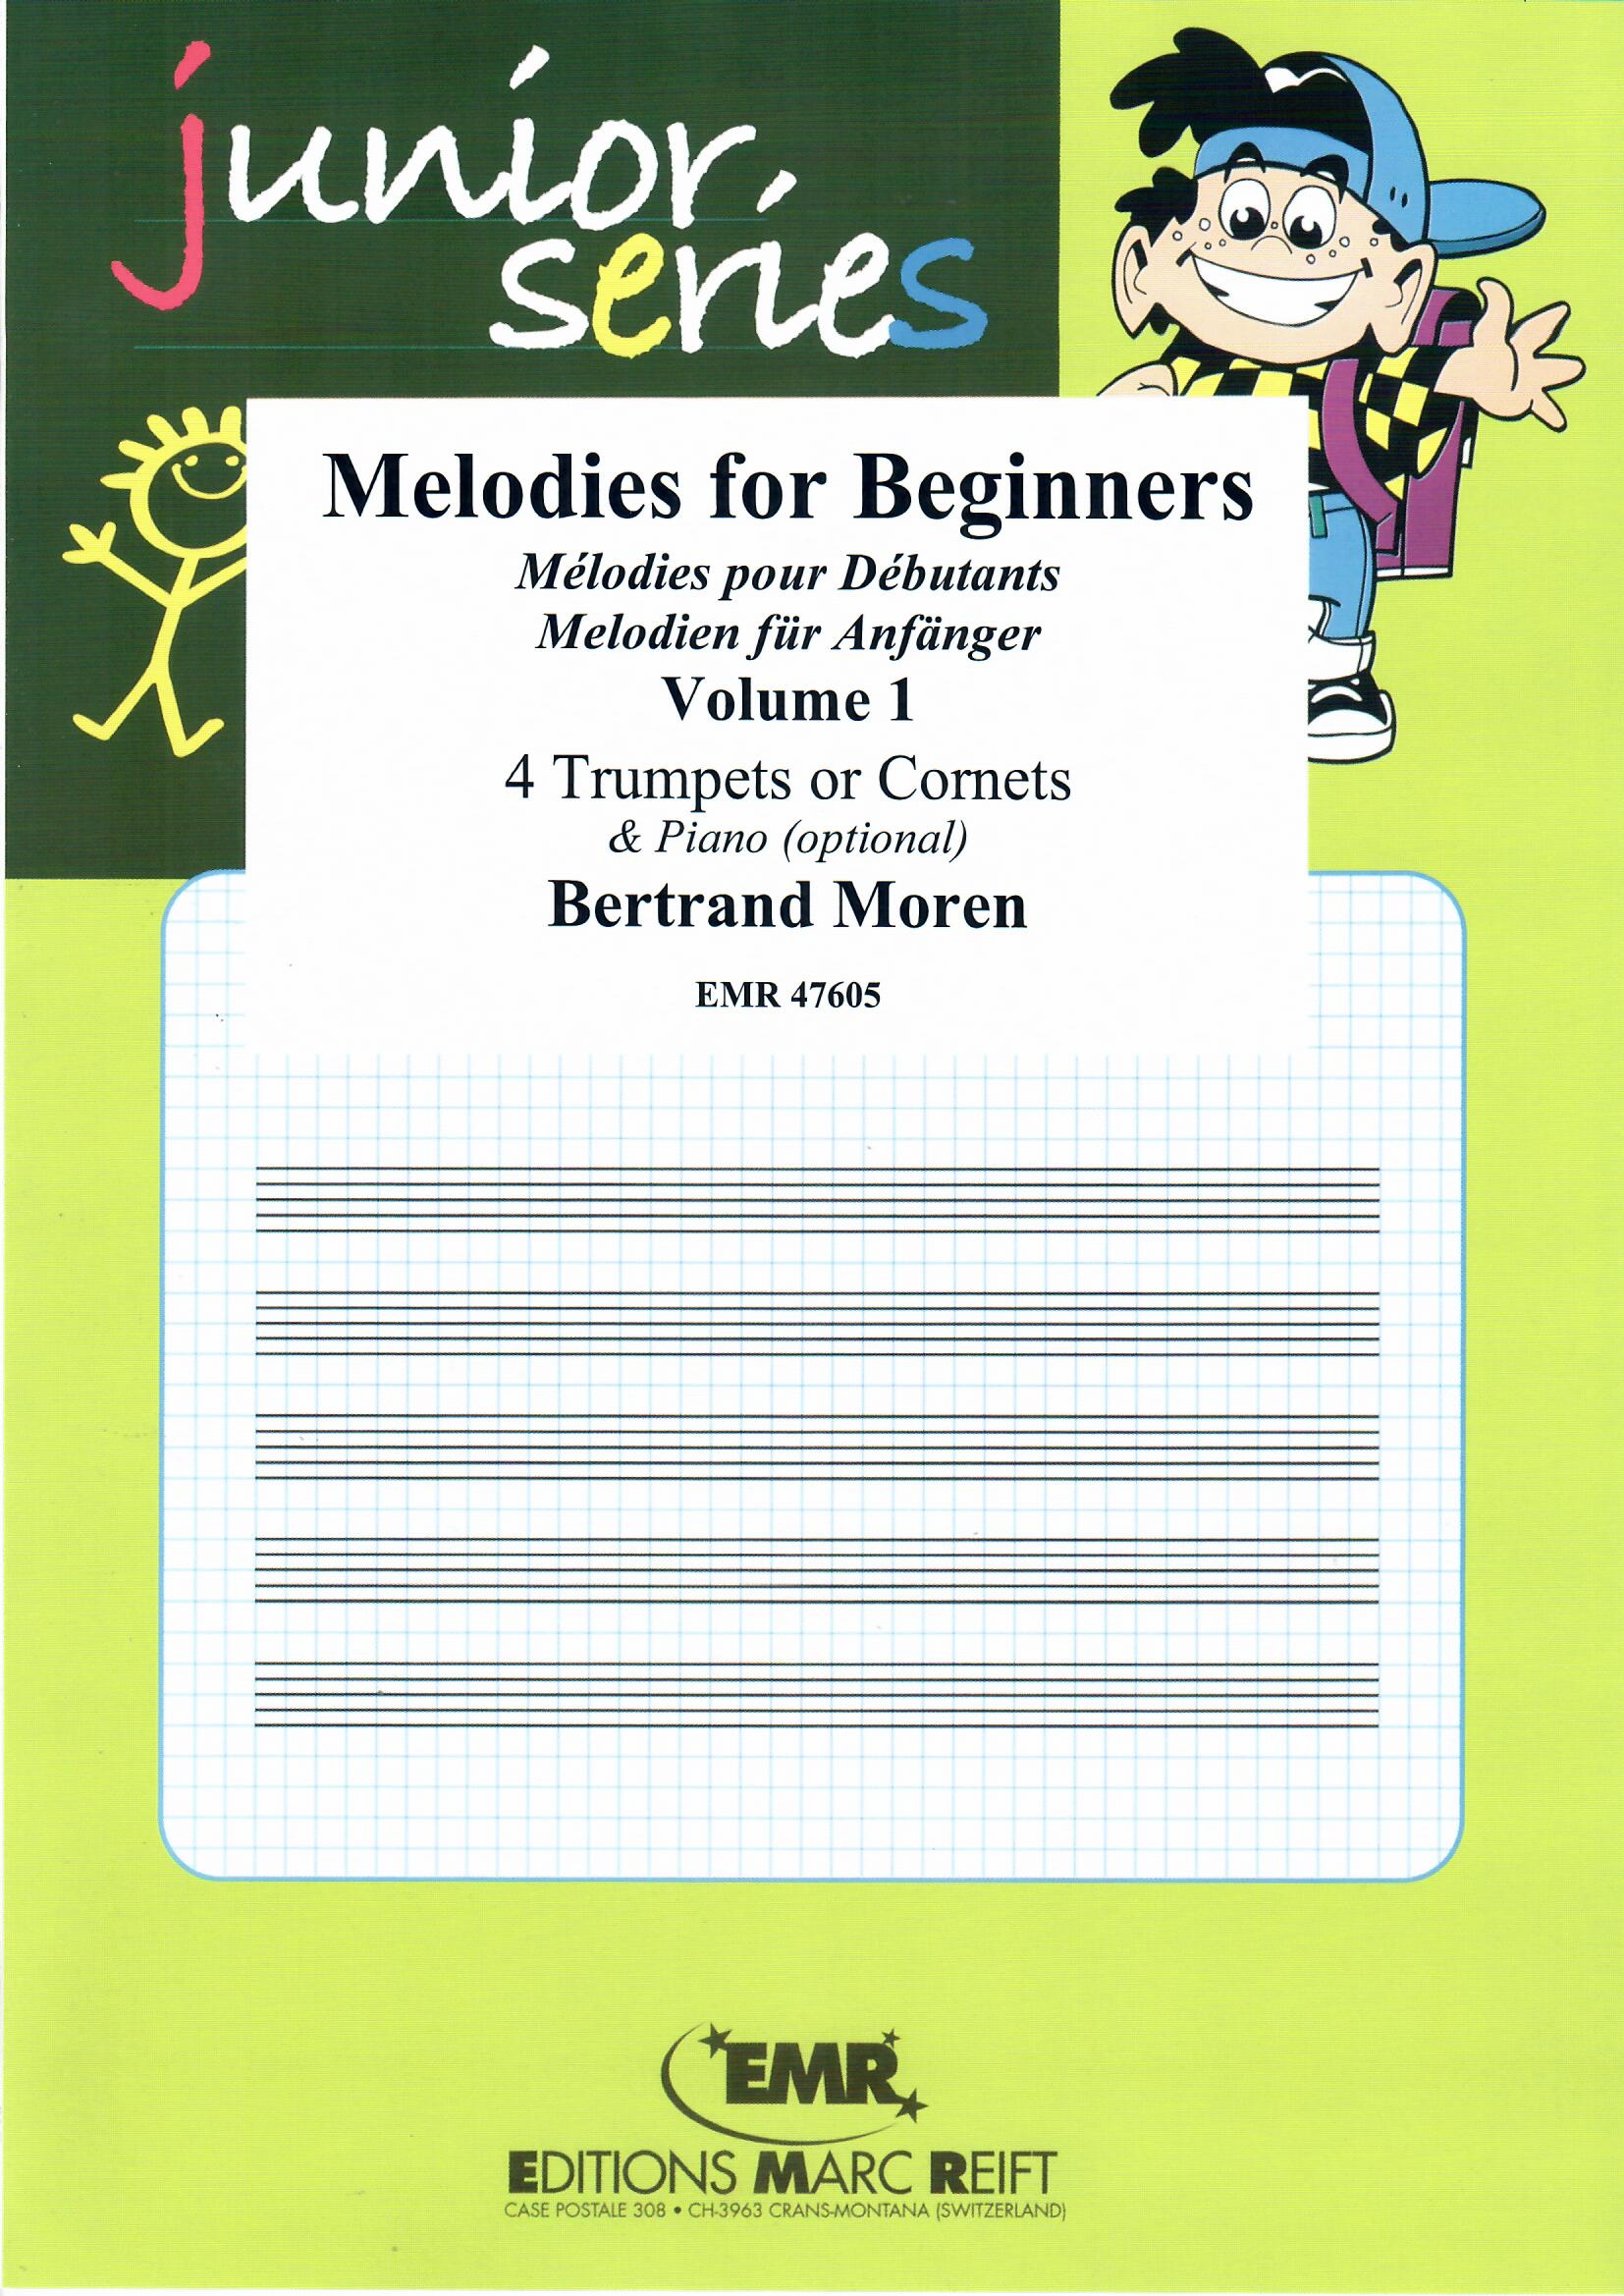 MELODIES FOR BEGINNERS VOLUME 1 - Cornet Quartet, Quartets